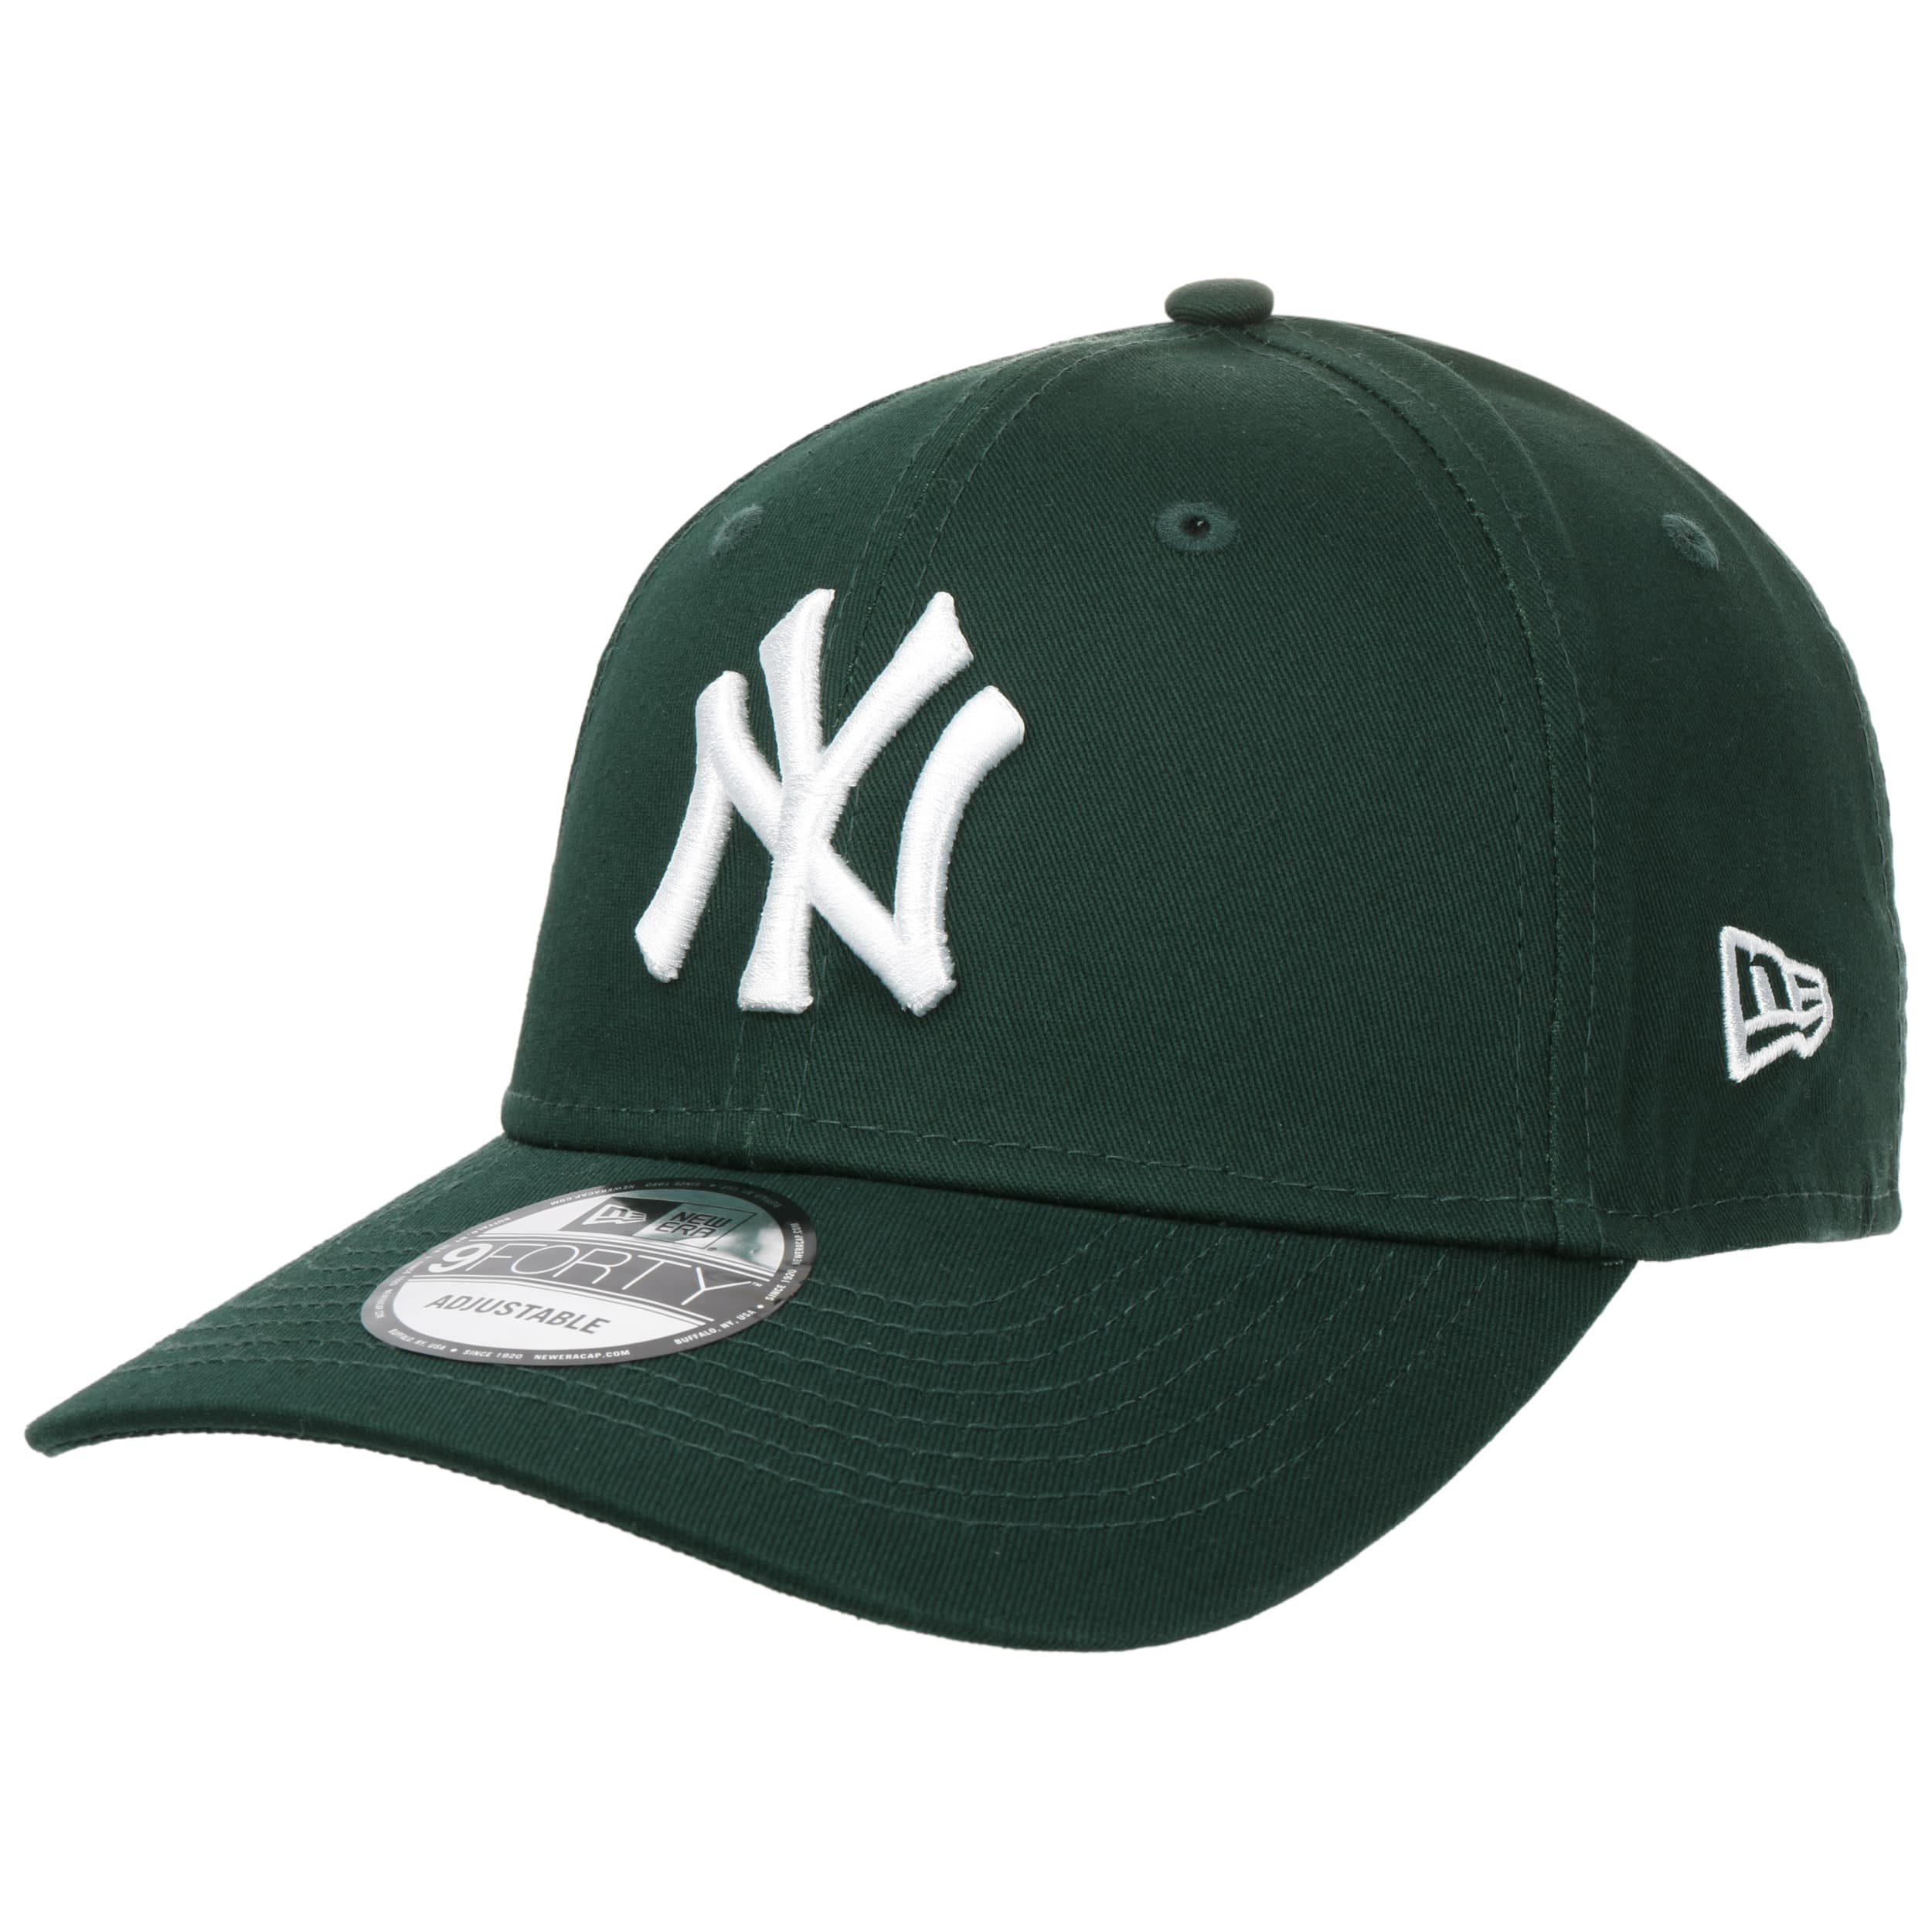 New Era - New York Yankees - Women's 9FORTY Cap - Pine Green